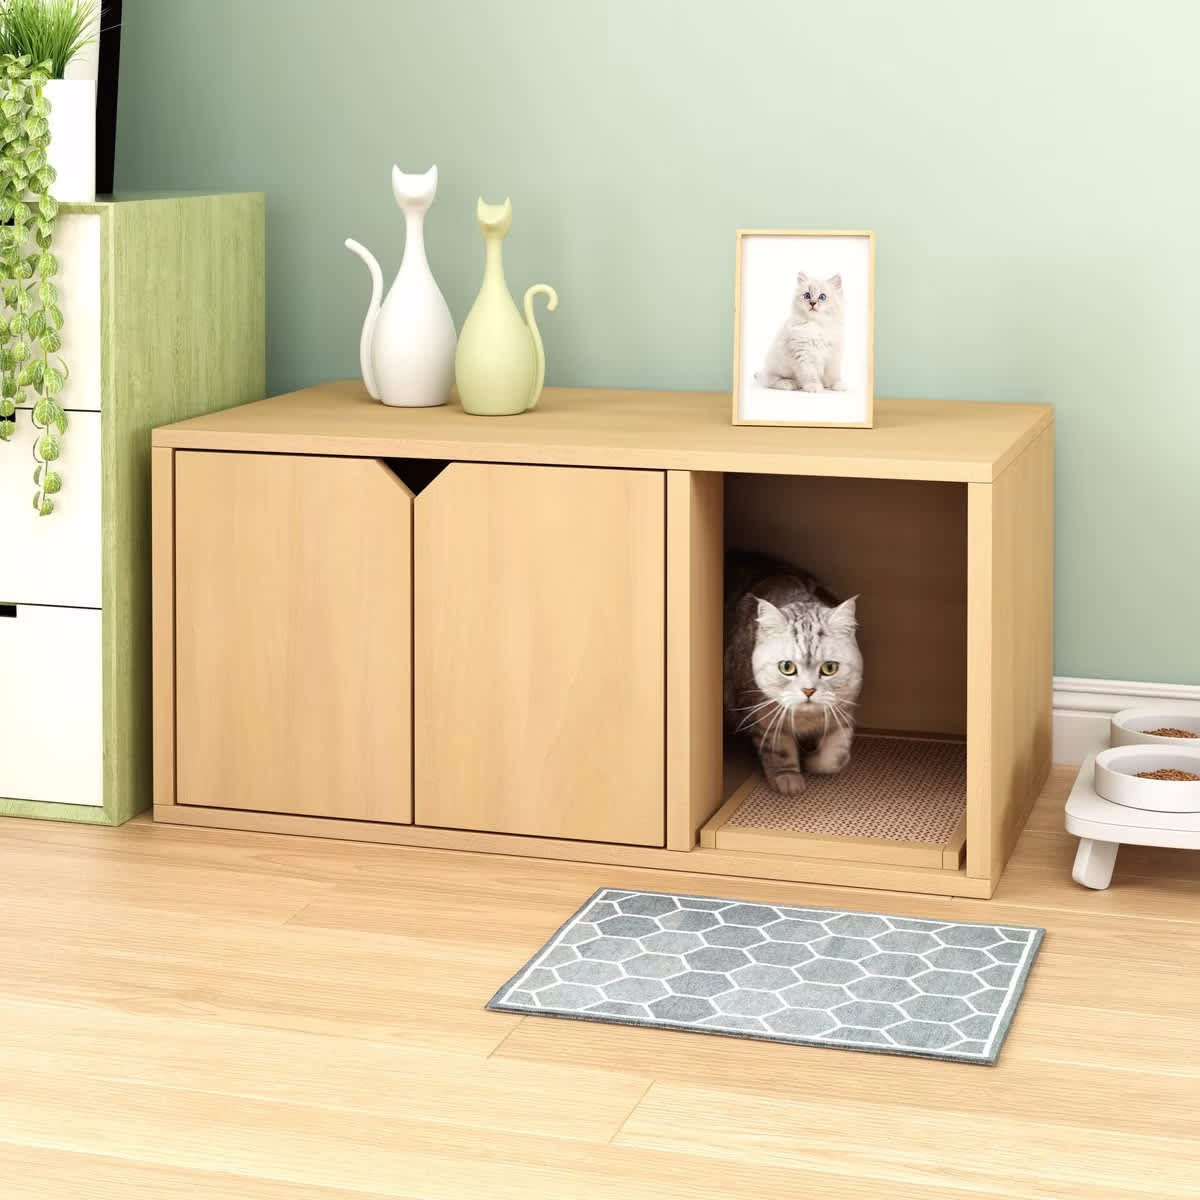 DINZI LVJ Hidden Cat Litter Box Enclosure, Flip Top Cat Washroom Furniture,  Good Ventilation, Entrance Can Be on The Left or Right, Enclosed Cat